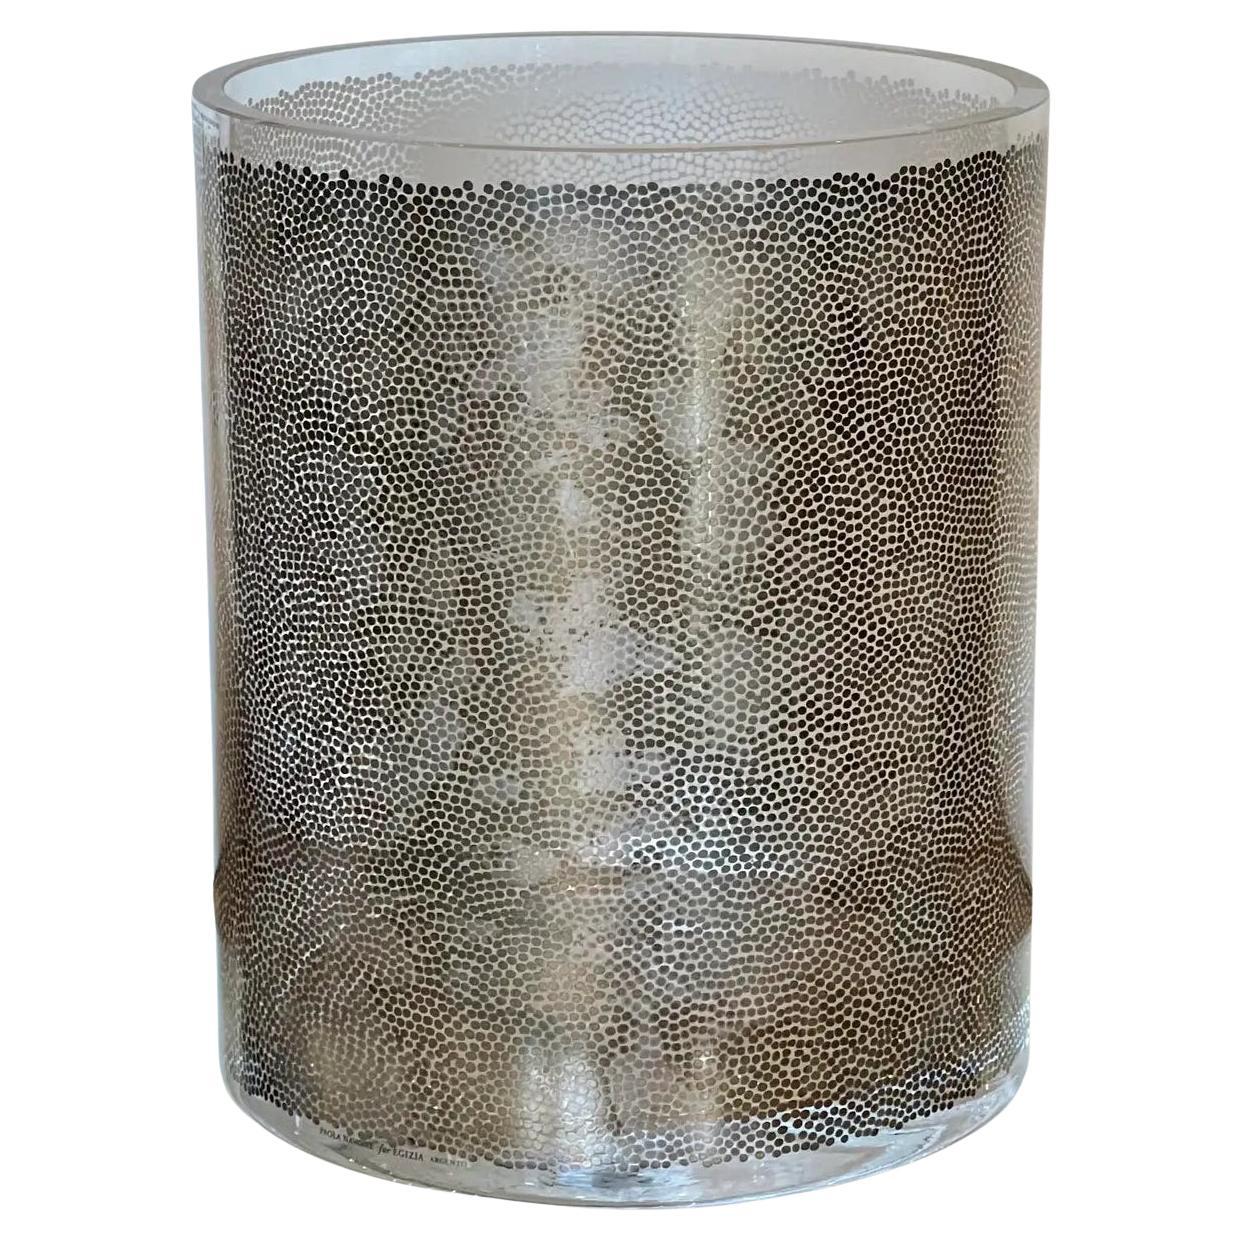 Barrel Form Paola Navone Egizia Italian Art Glass Vase For Sale